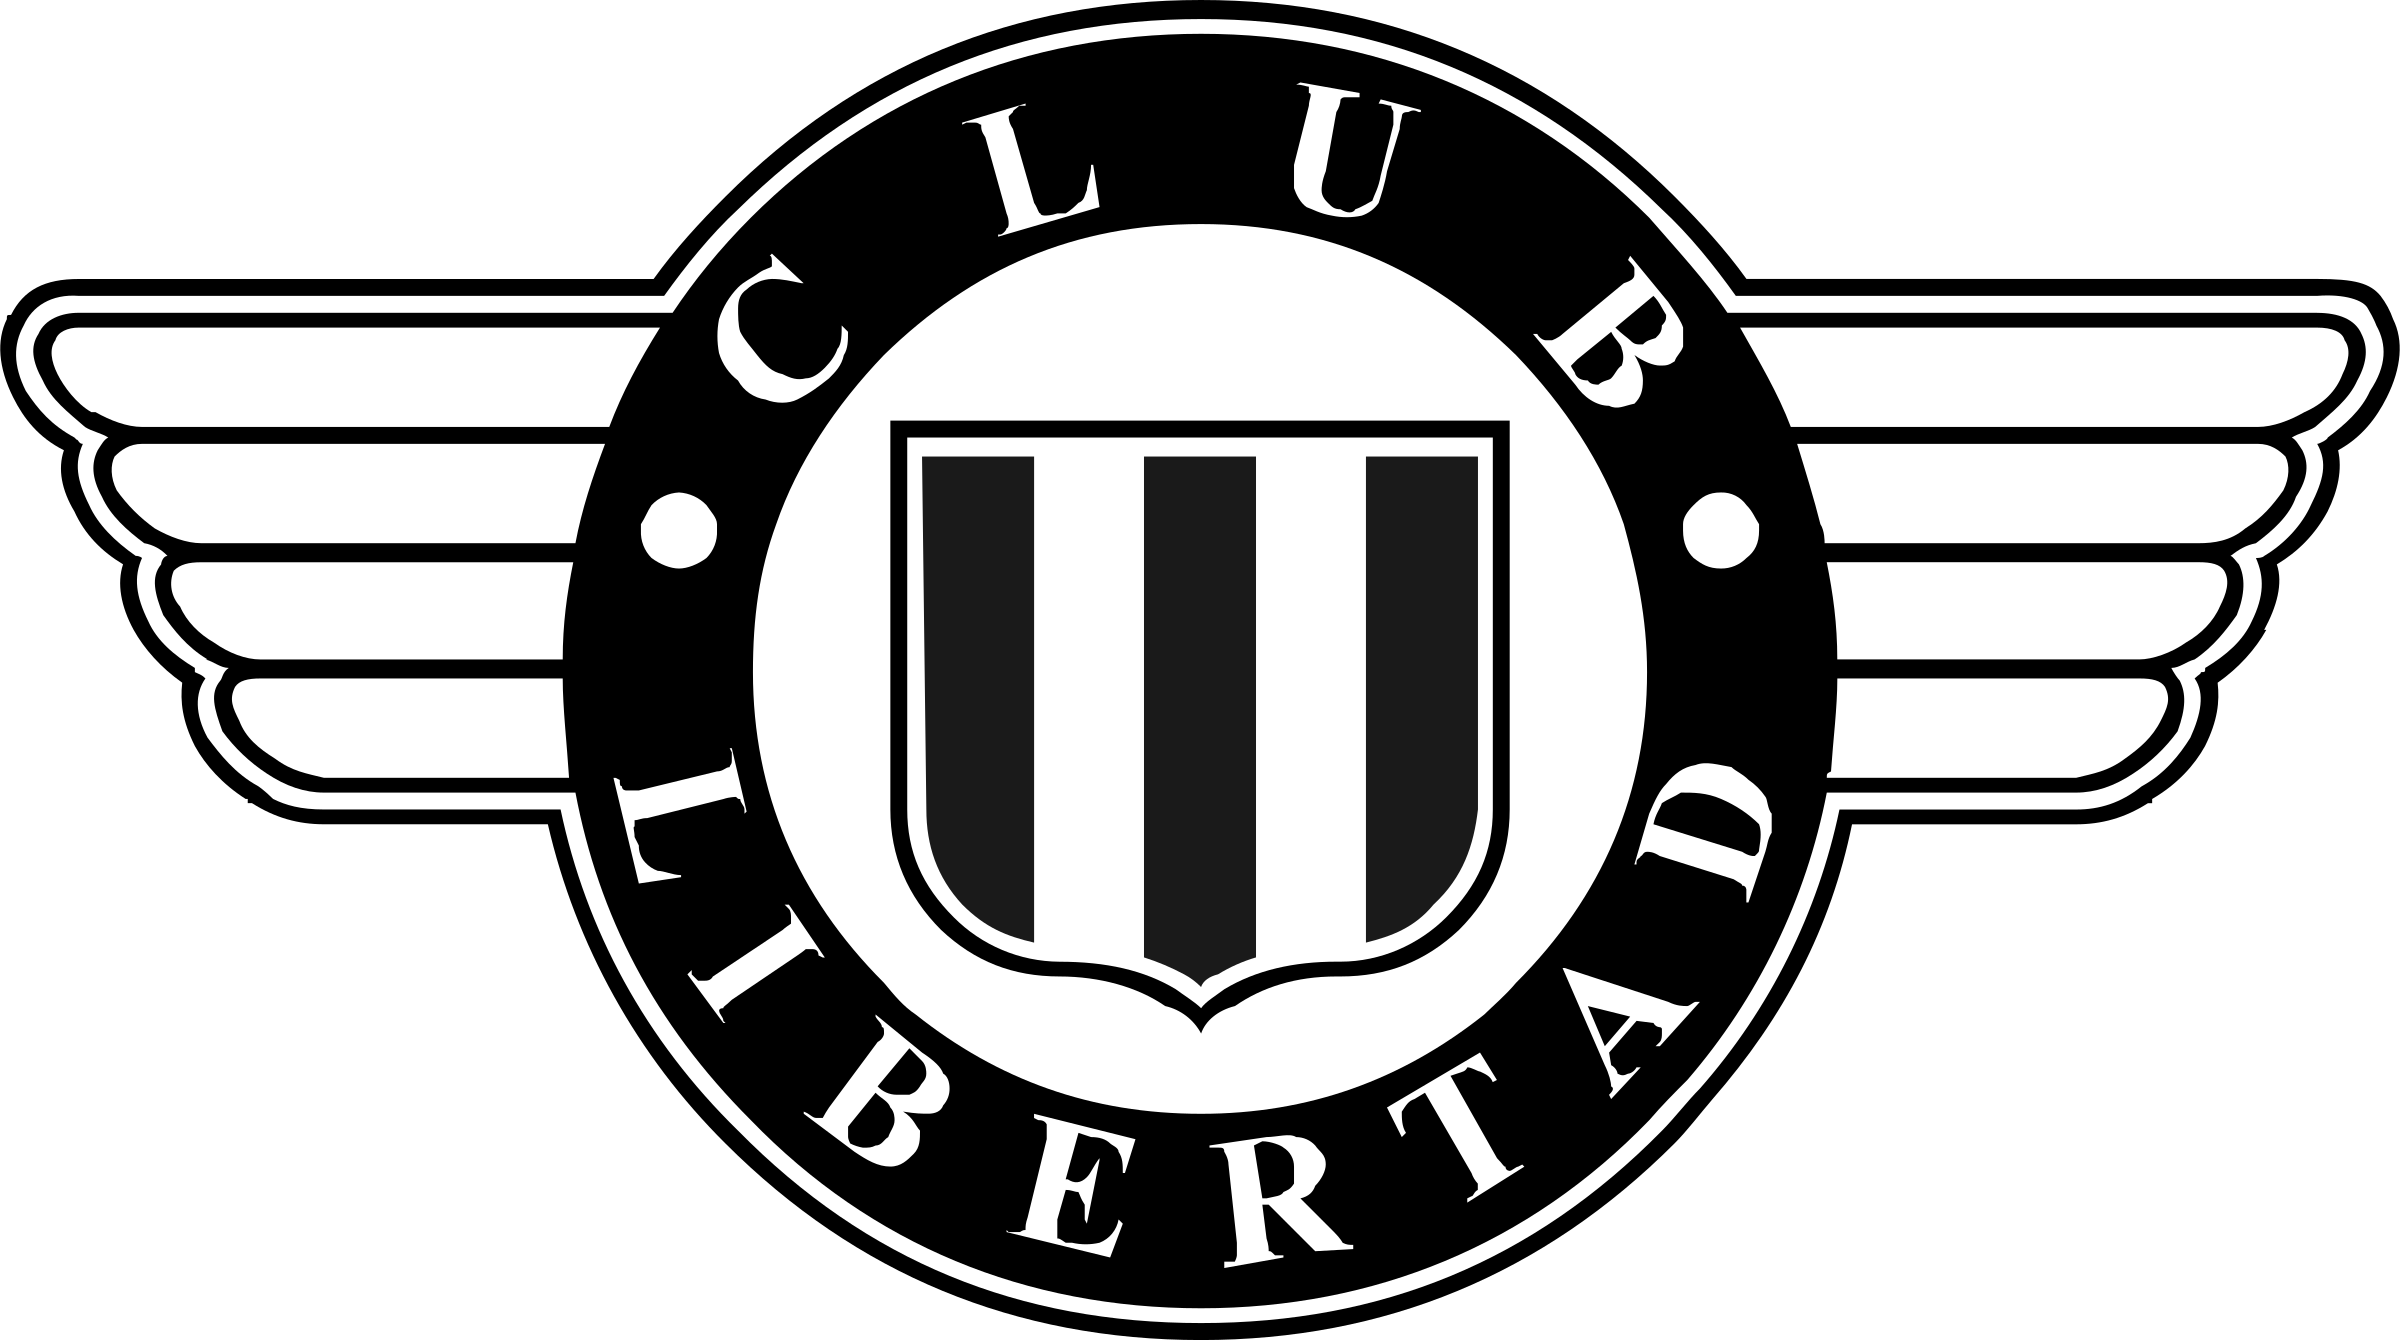 Club Libertad Wallpapers